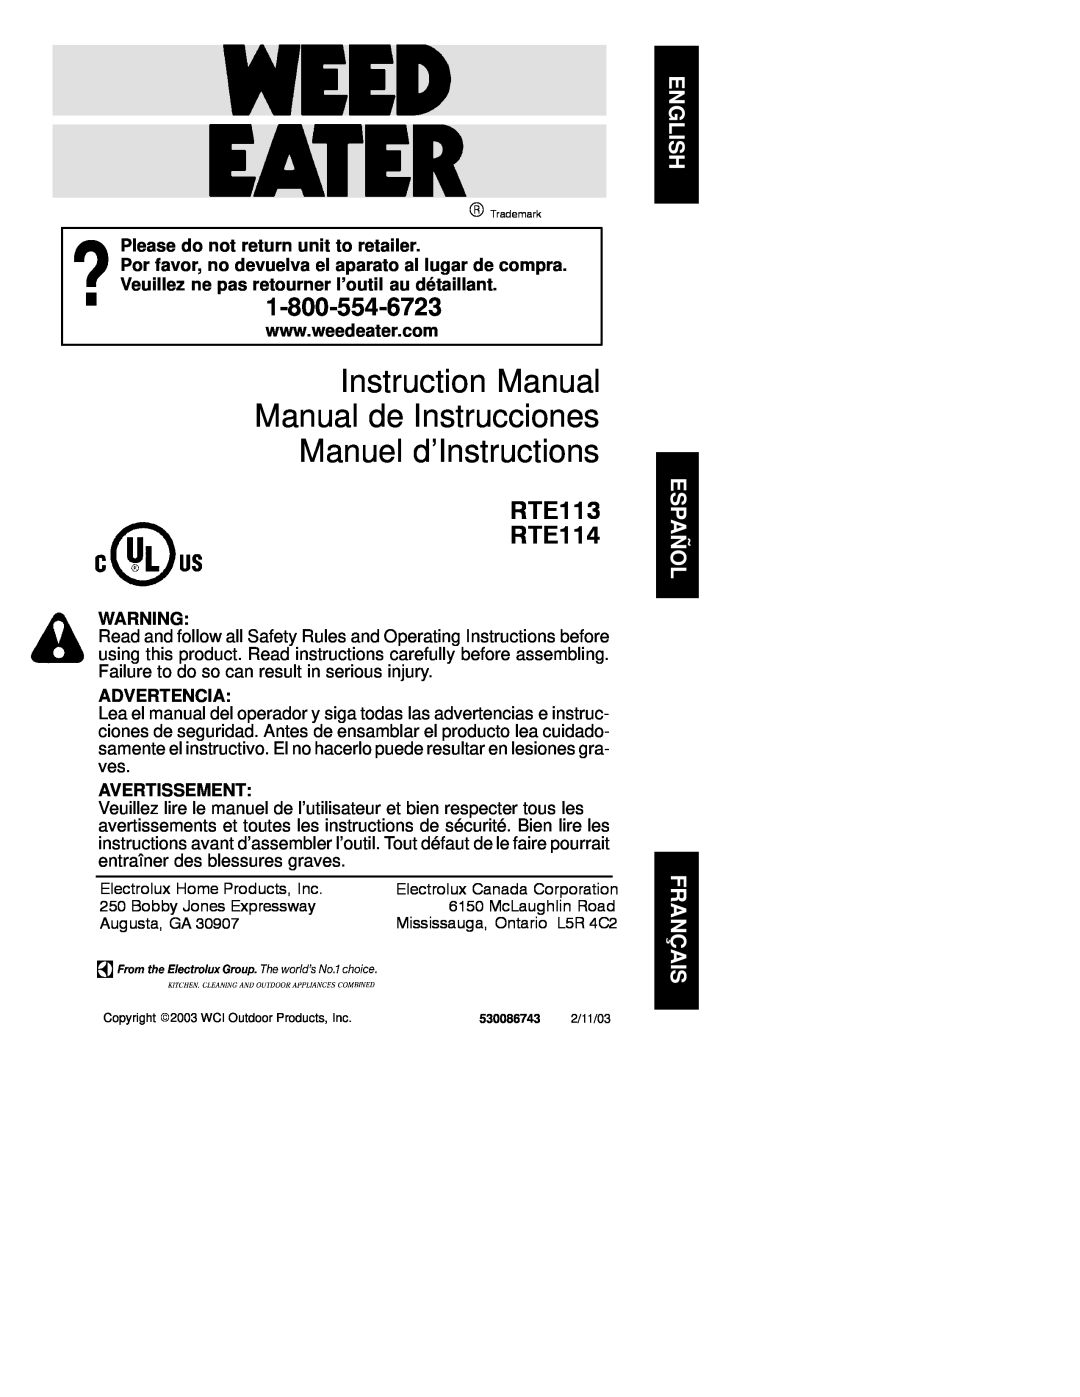 Weed Eater instruction manual Please do not return unit to retailer, Advertencia, Avertissement, RTE113 RTE114 